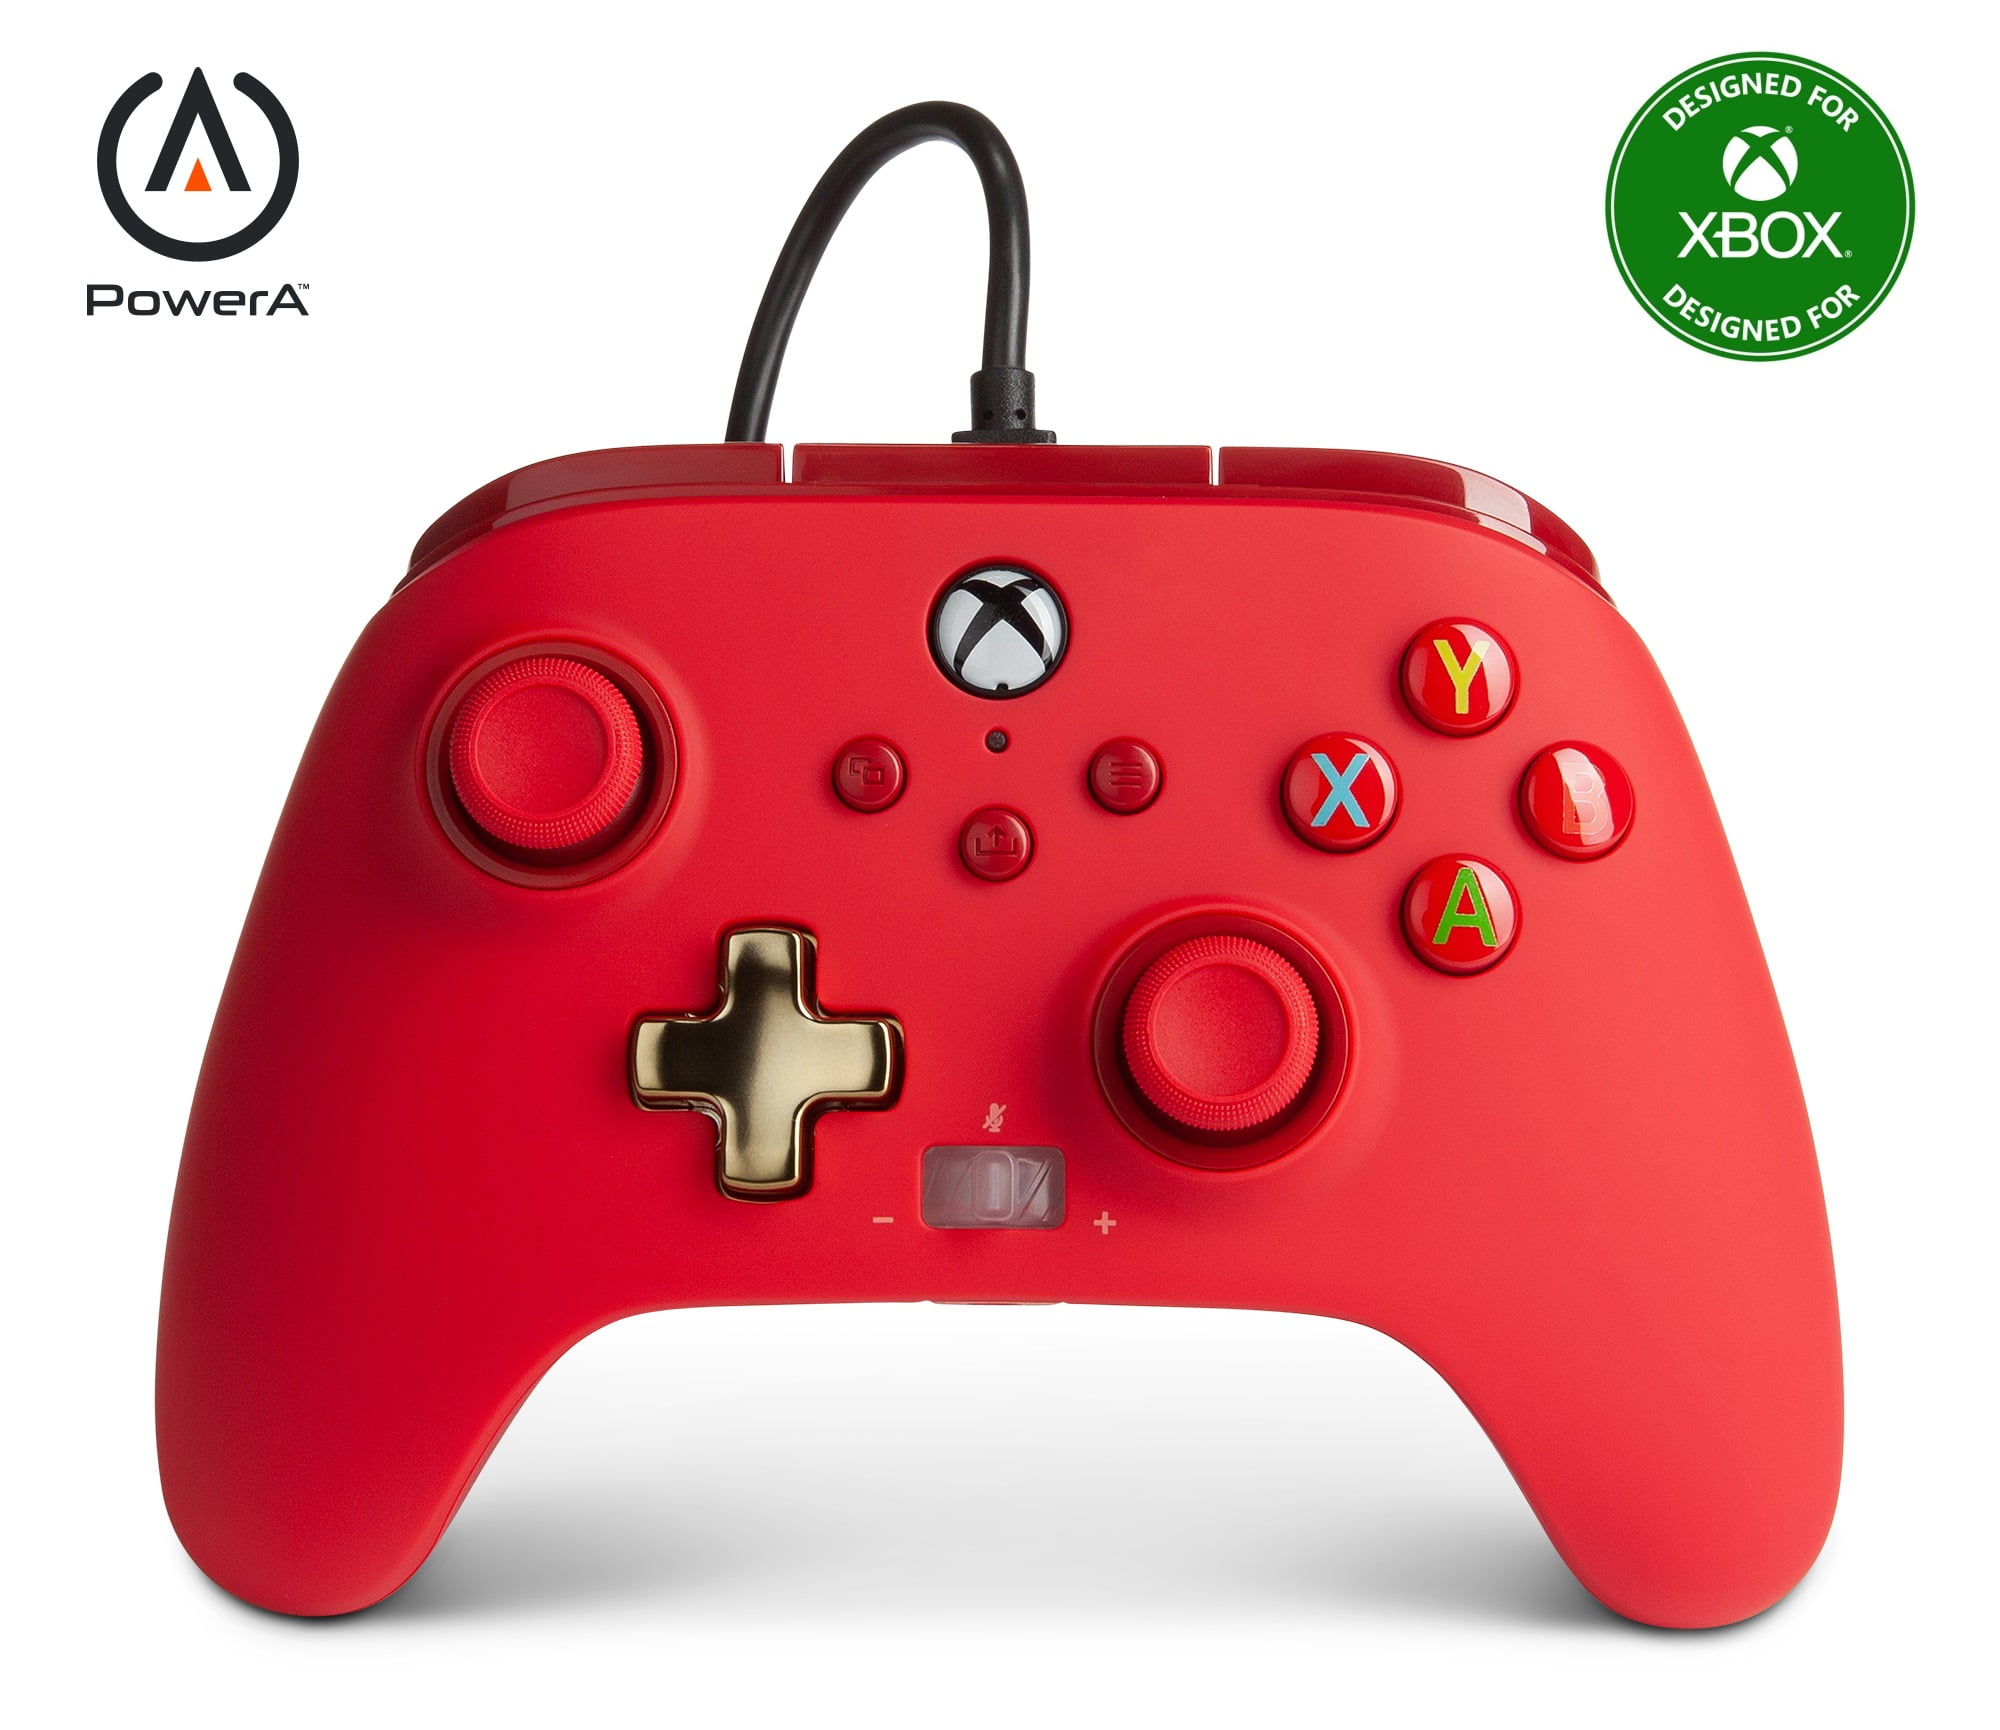 PowerA Enhanced Xbox controller review: A perfect second controller